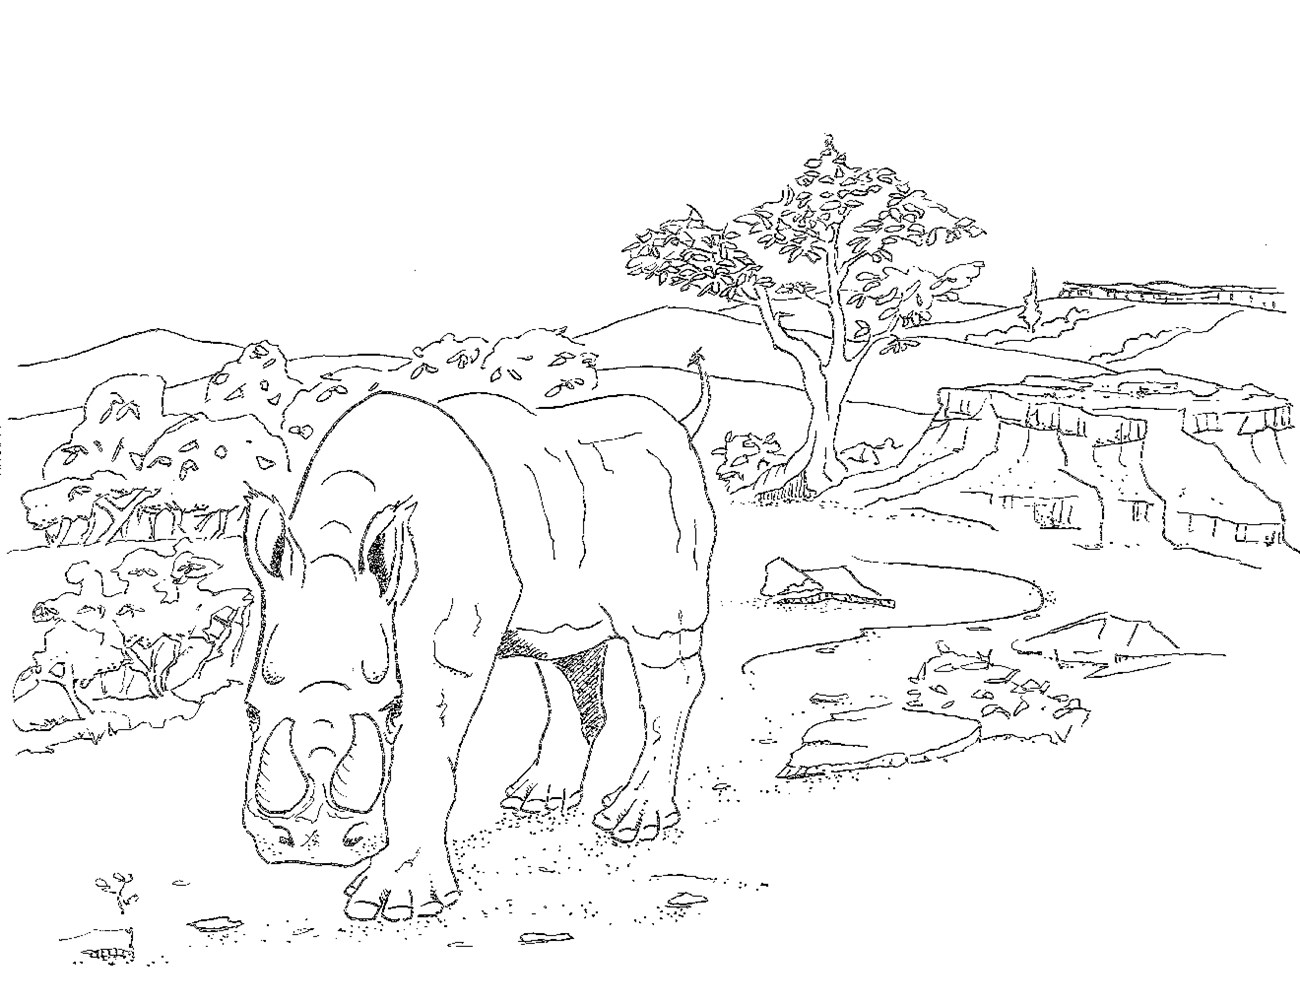 a rhinoceros with two horns walks through a Savannah-like landscape